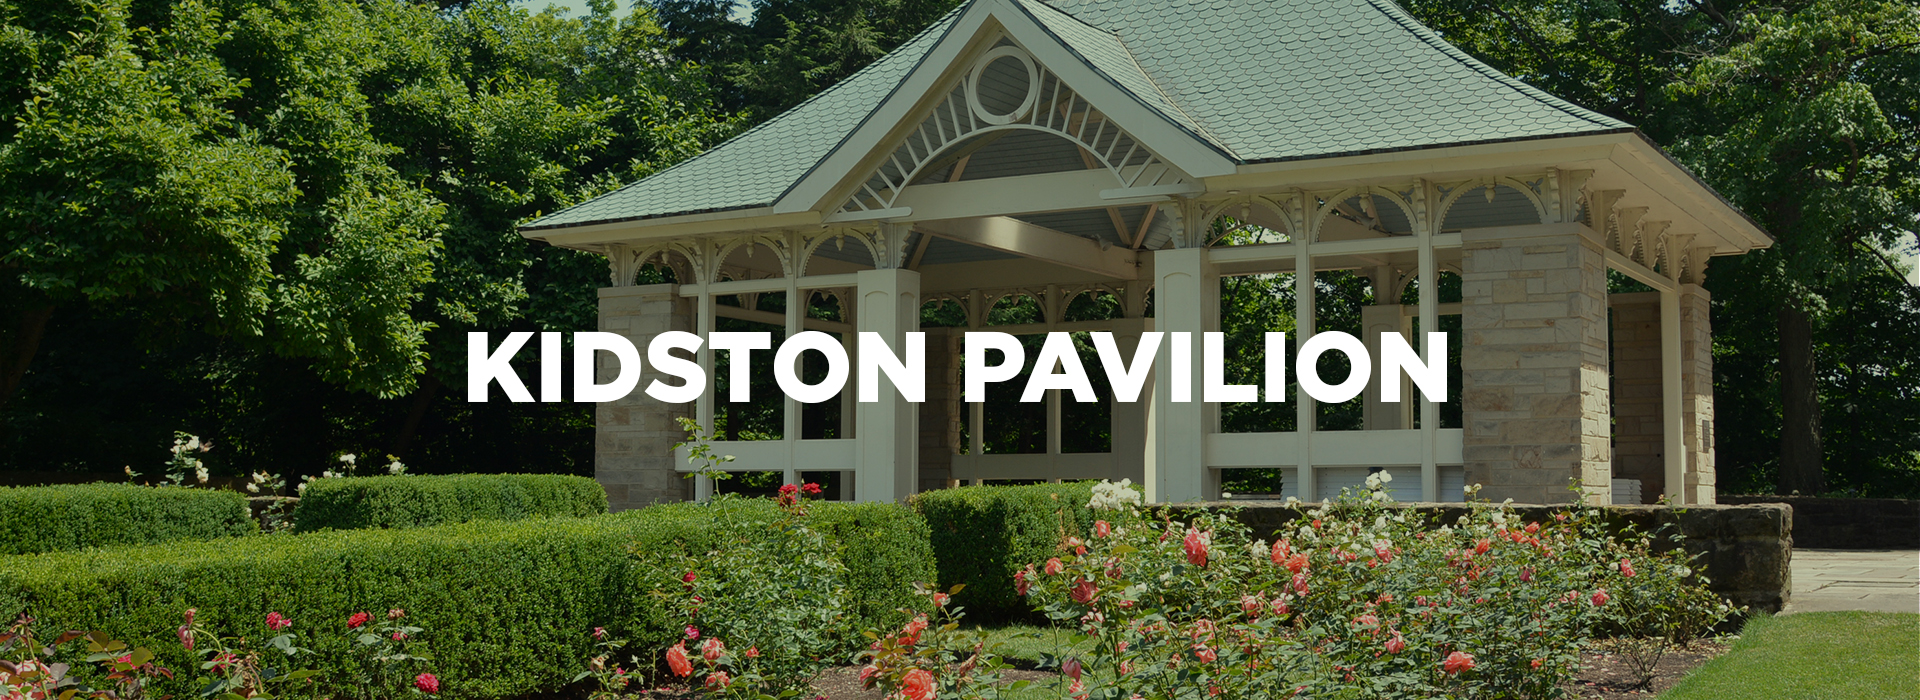 Kidston Pavilion Mill Creek Metroparks